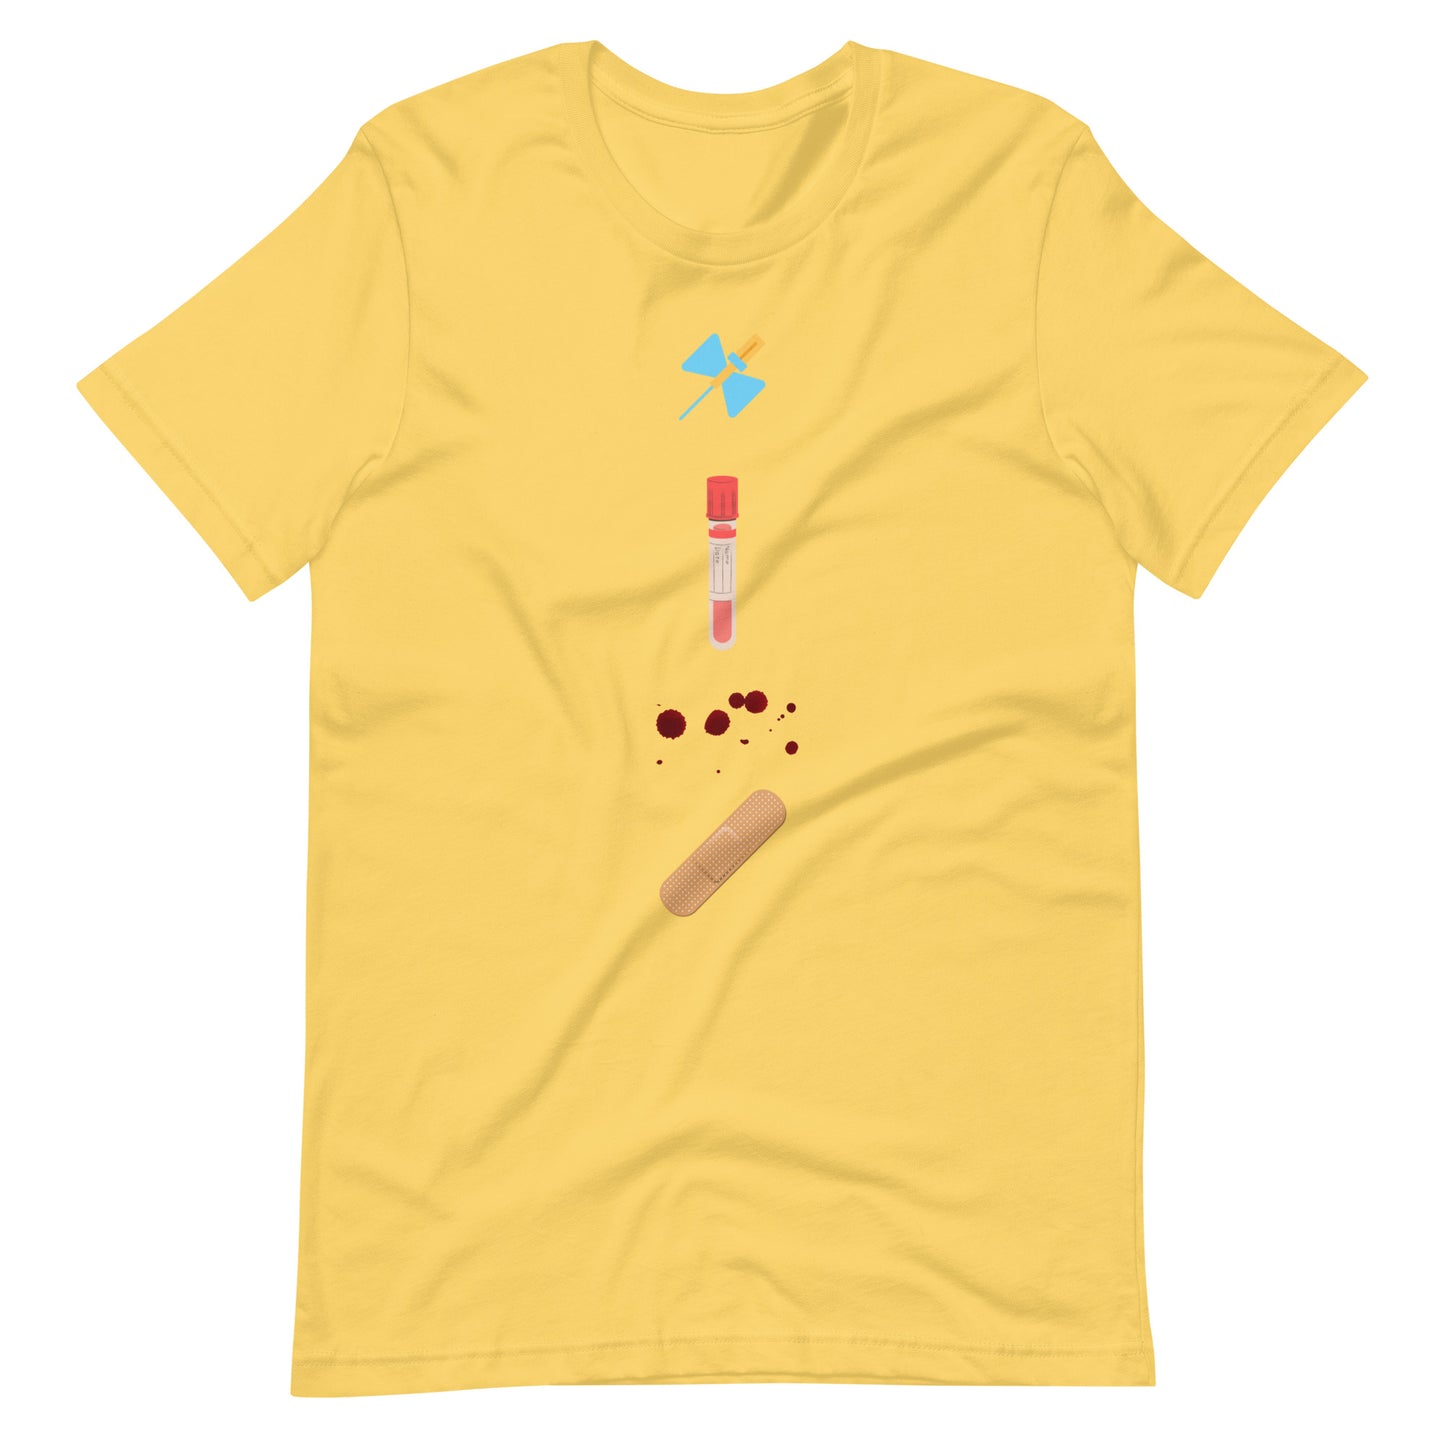 Phlebotomy, Phlebotomist, Blood Draw, Nurse, Medical Student, Doctor, Medical School, Funny Medical T-shirt, Funny Doctor T-shirt